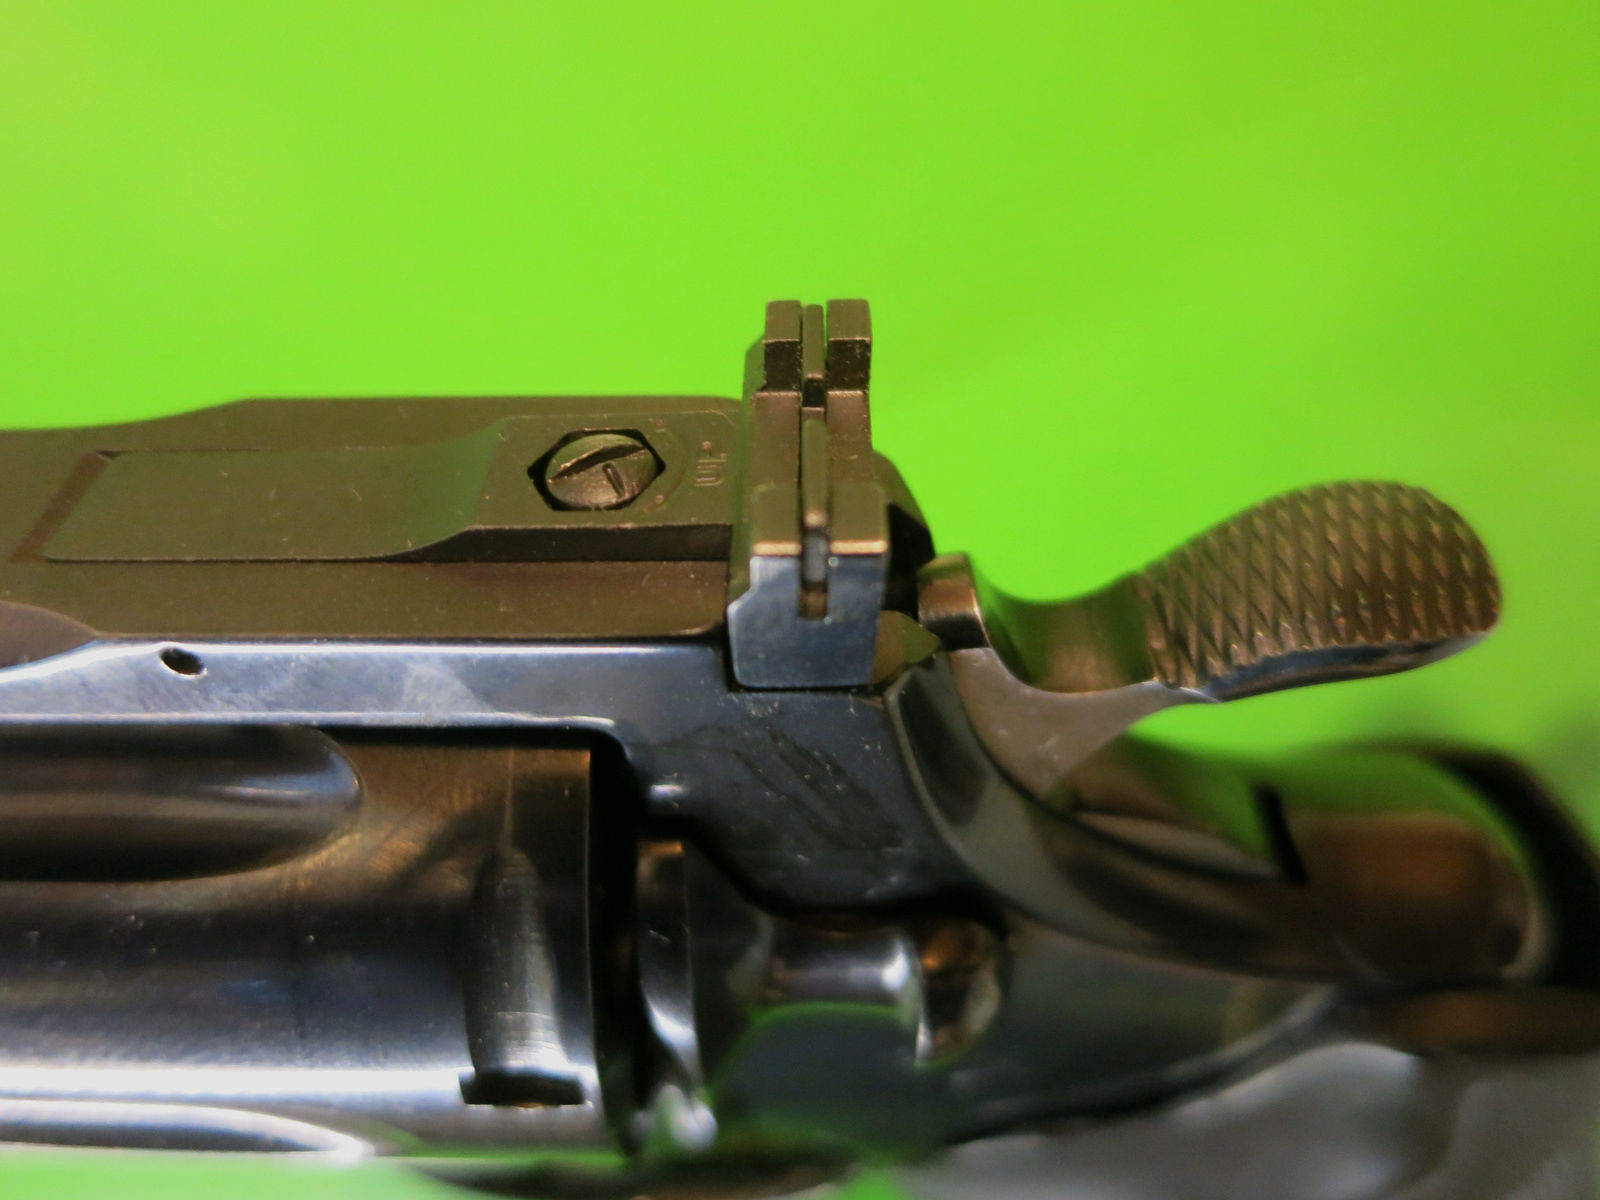 1971 COLT PYTHON, Royal Blue, .357 Magnum, 6" Lauf, Pachmayr-Griff   #86